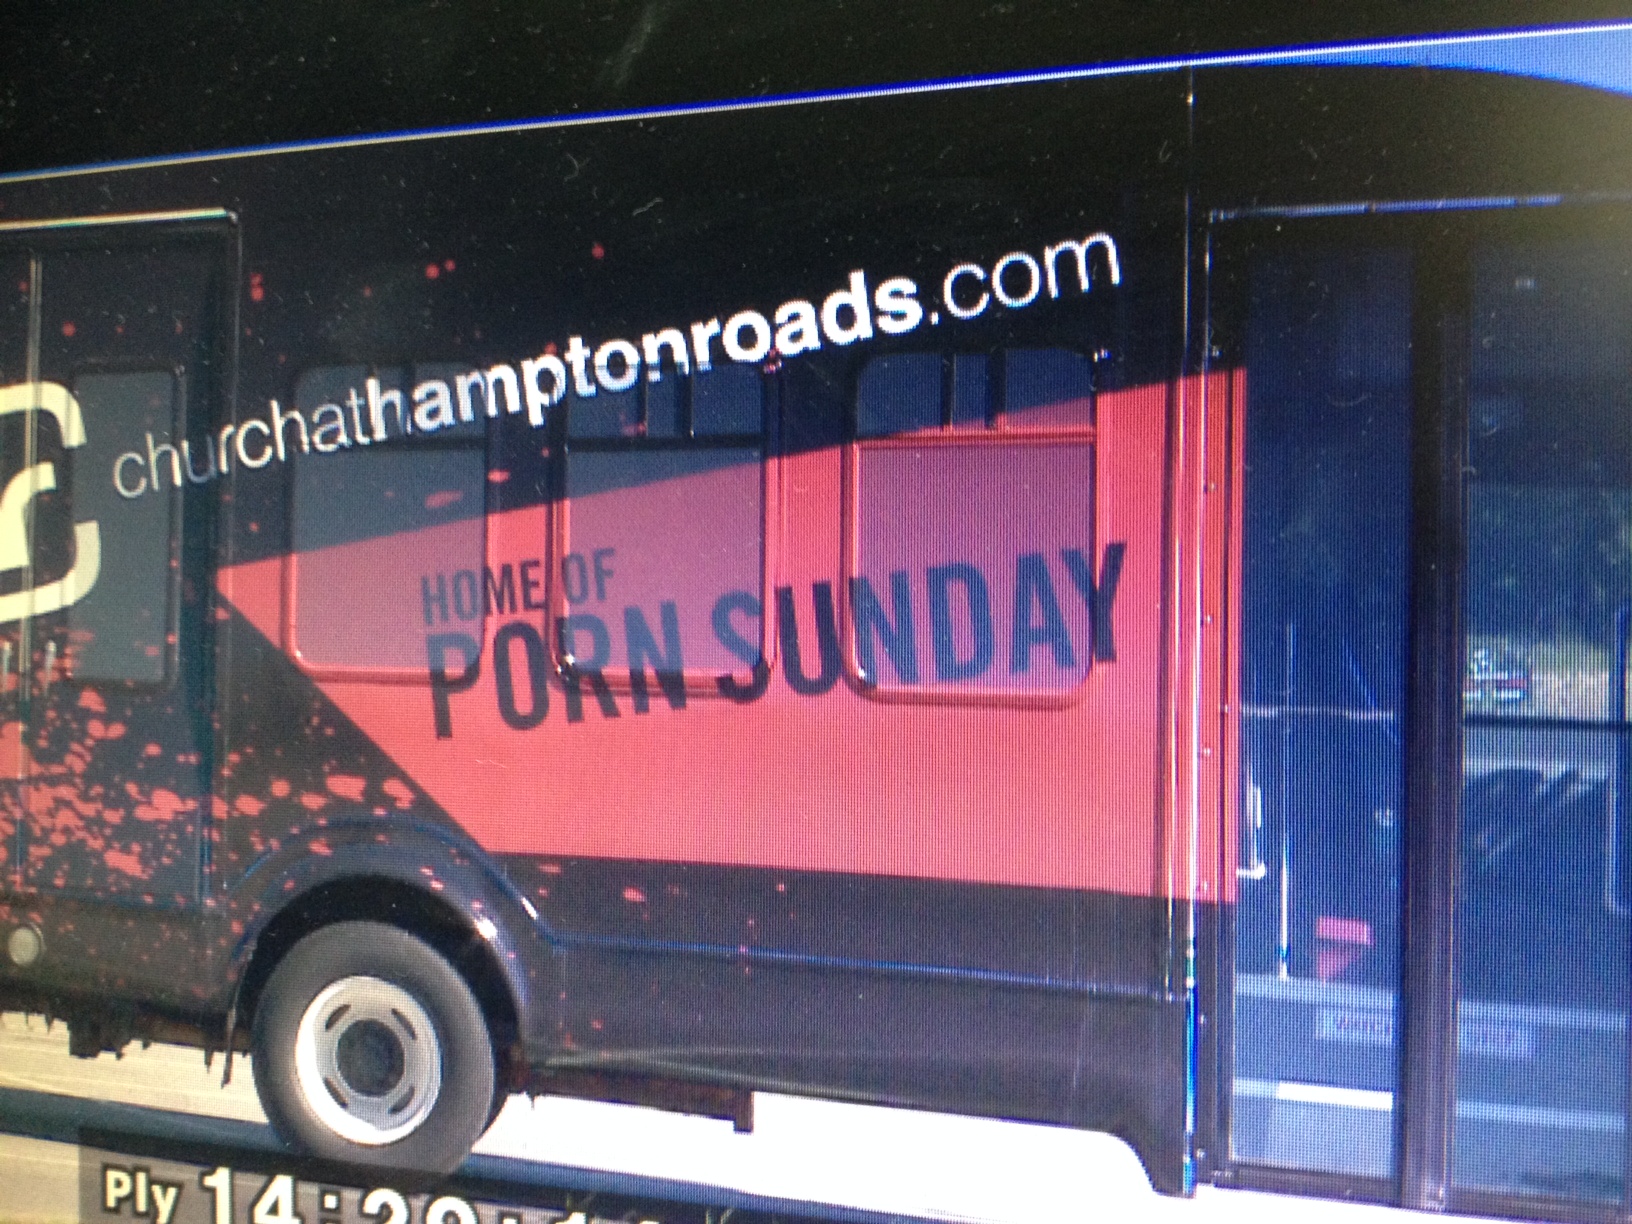 Public Church Porn - Church holds 'Porn Sunday' event | 13newsnow.com